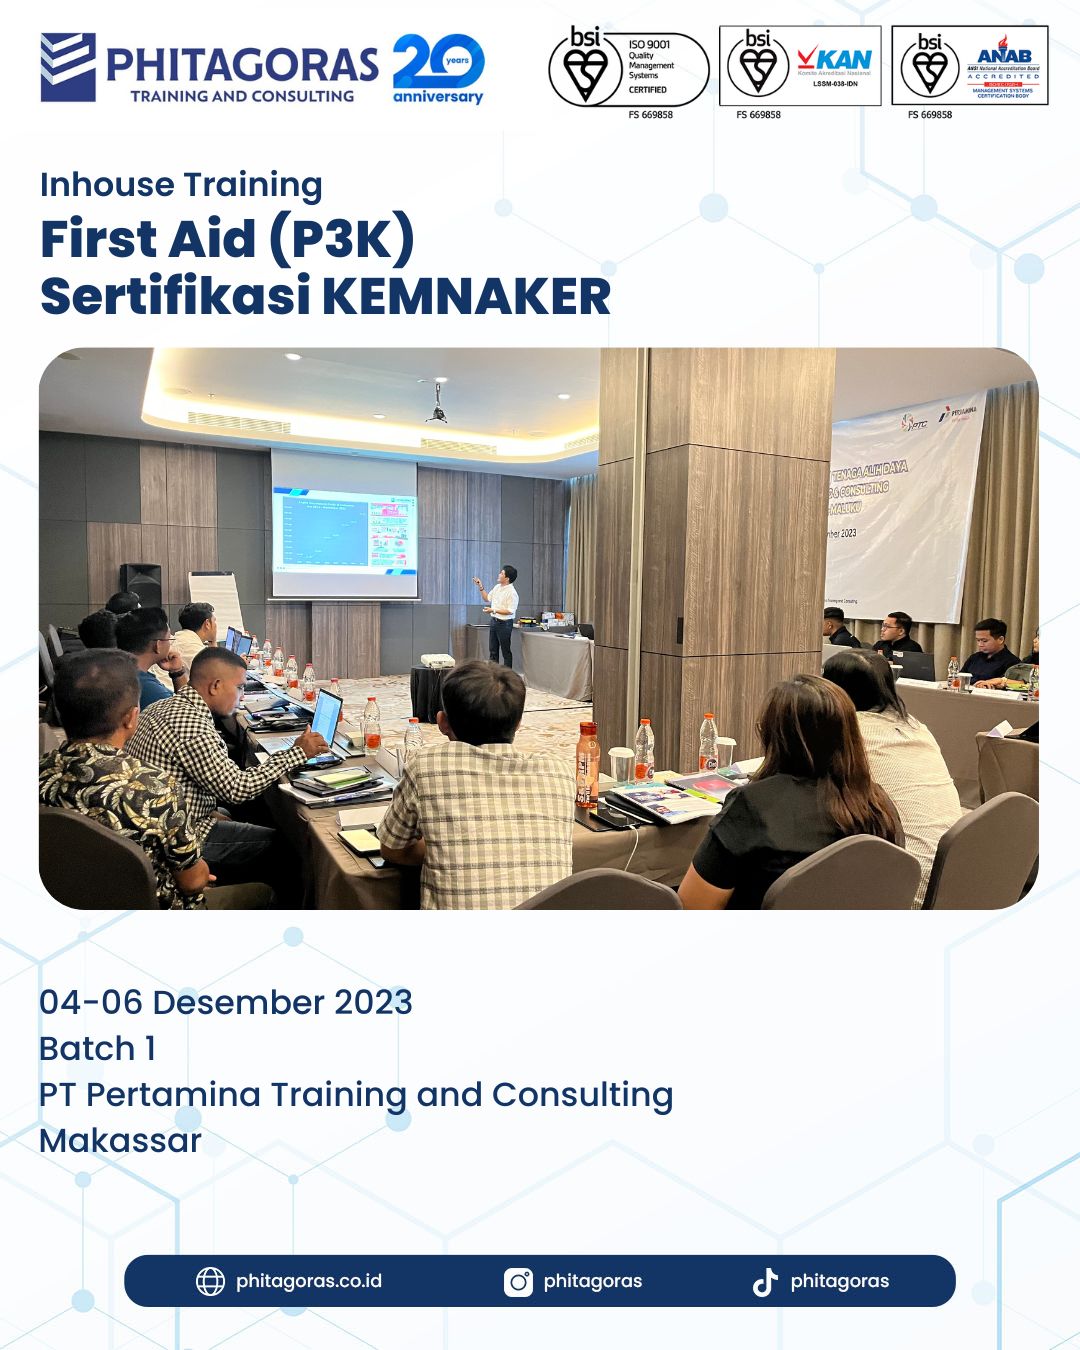 Inhouse Training First Aid (P3K) Sertifikasi KEMNAKER - PT Pertamina Training and Consulting Makassar Batch 1